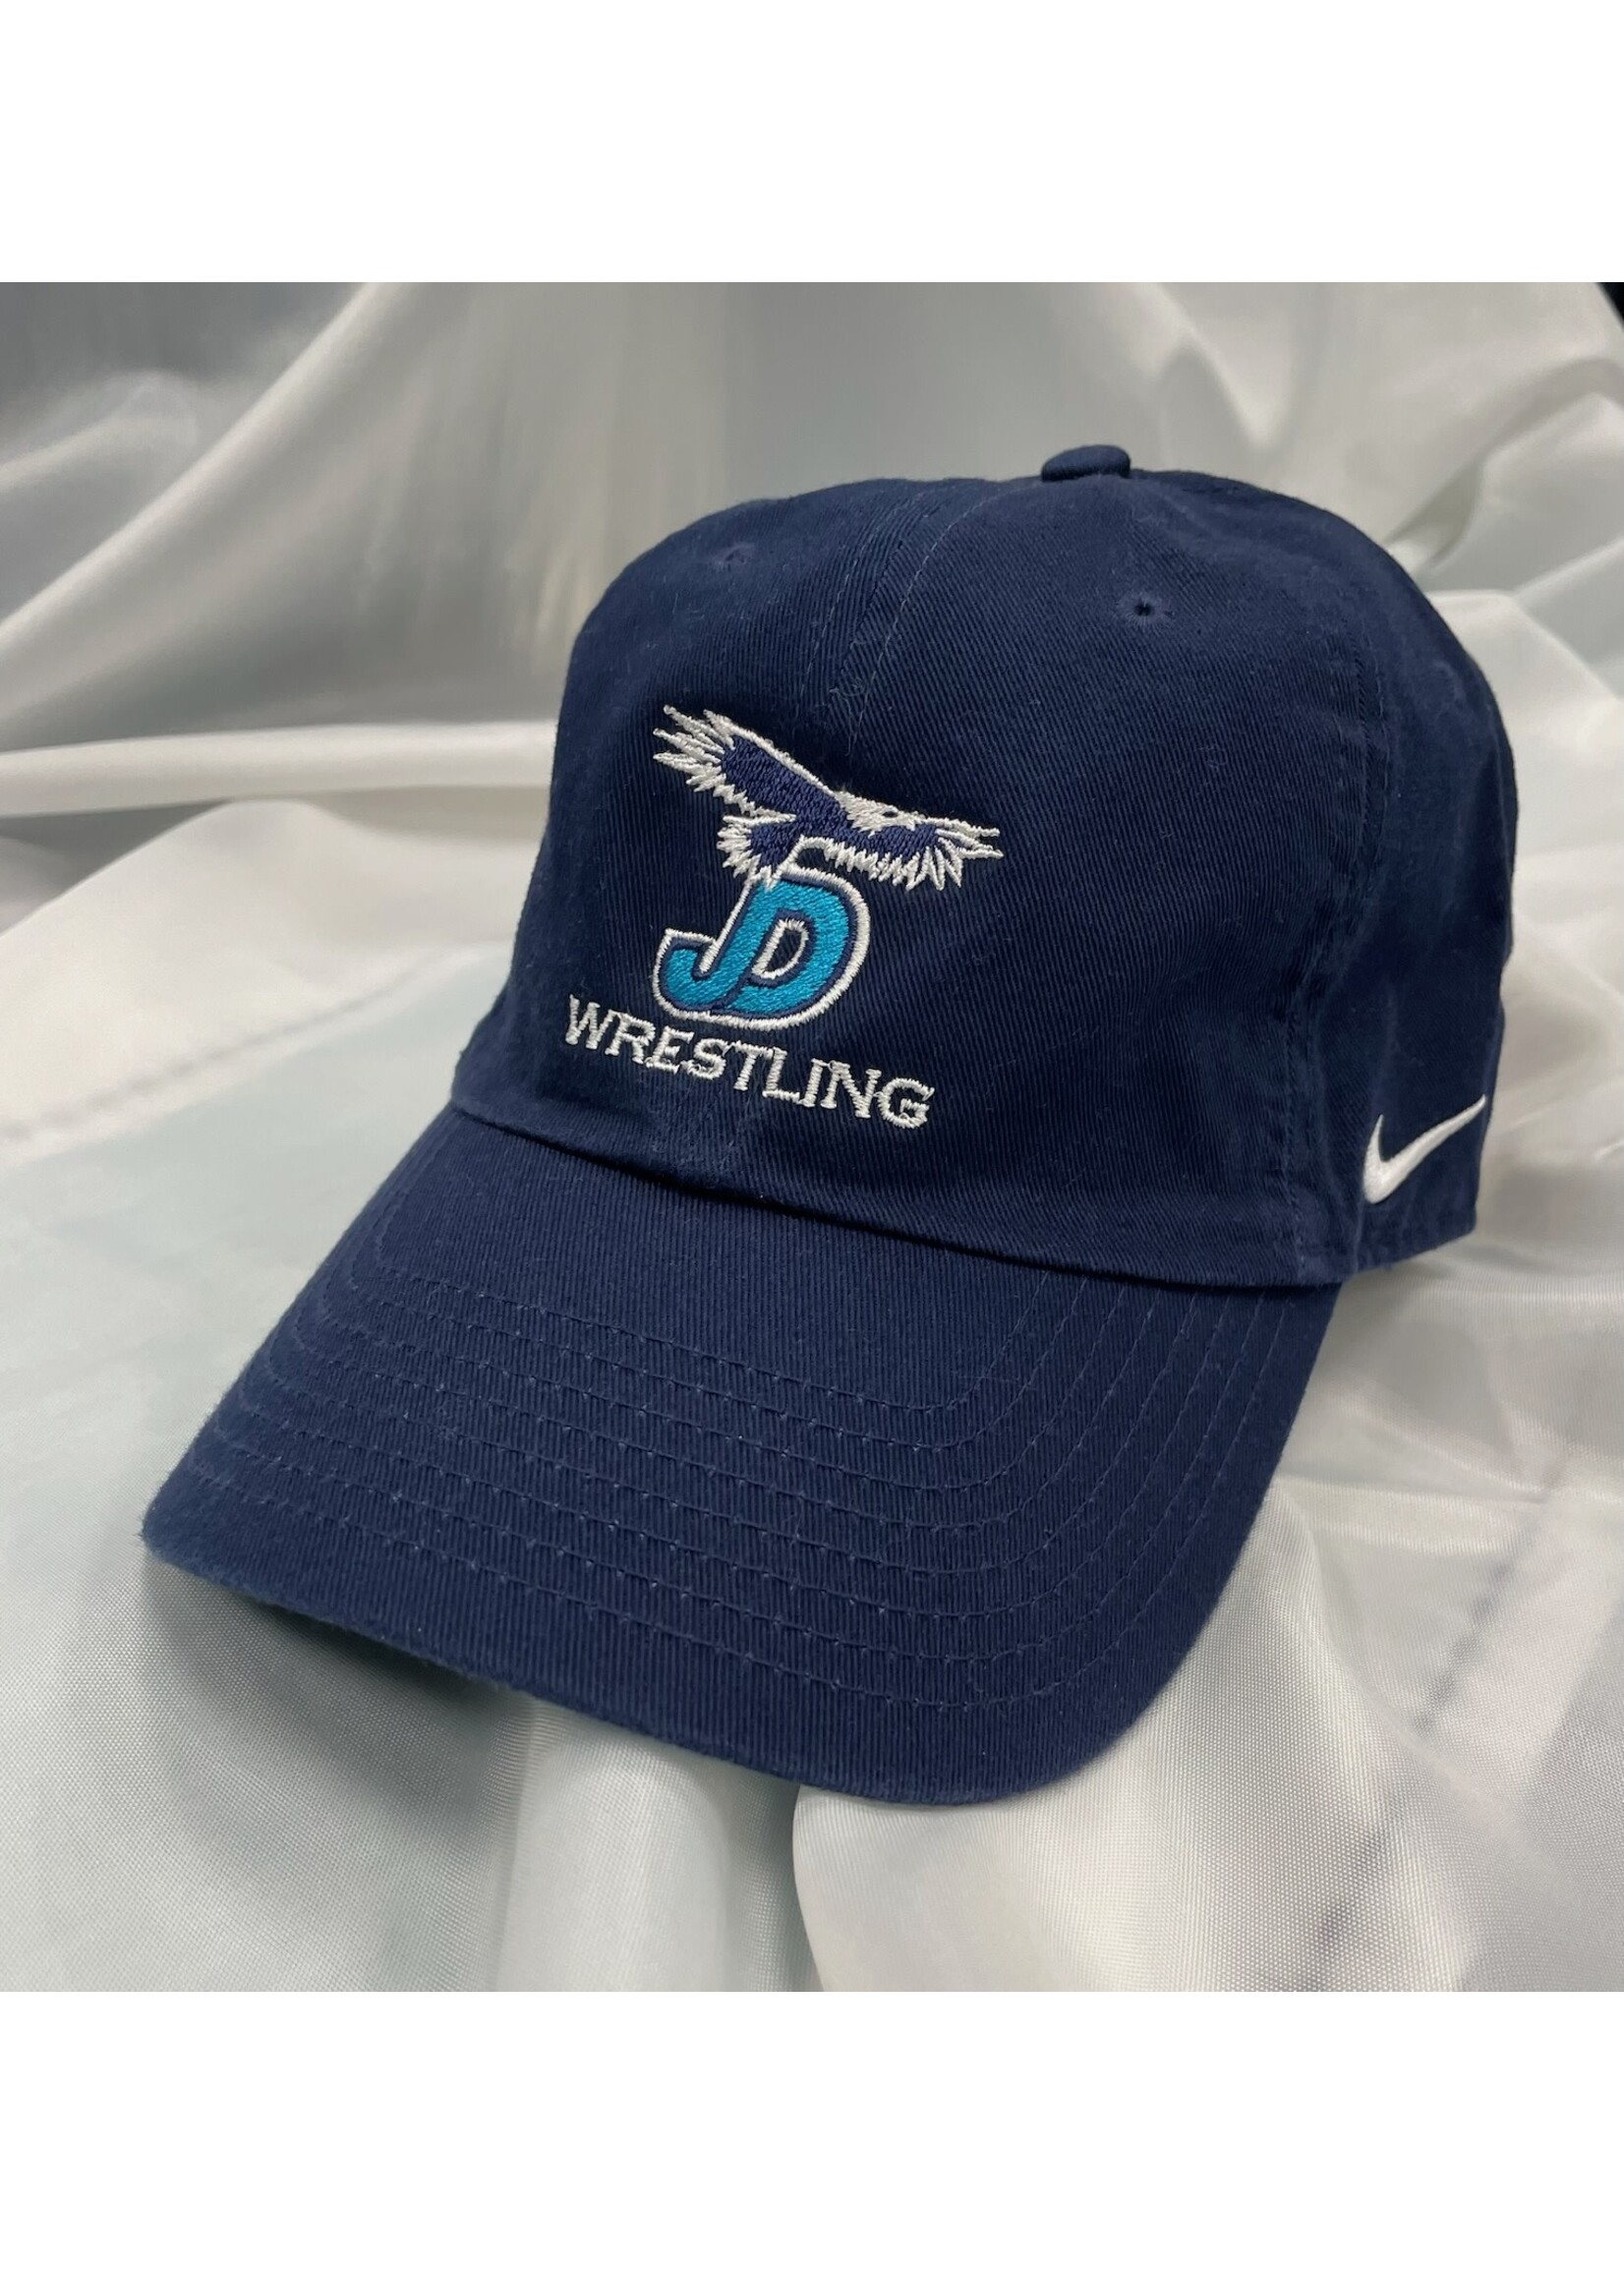 NON-UNIFORM Hat- Custom Nike JD Eagle Wrestling Cap, Unisex